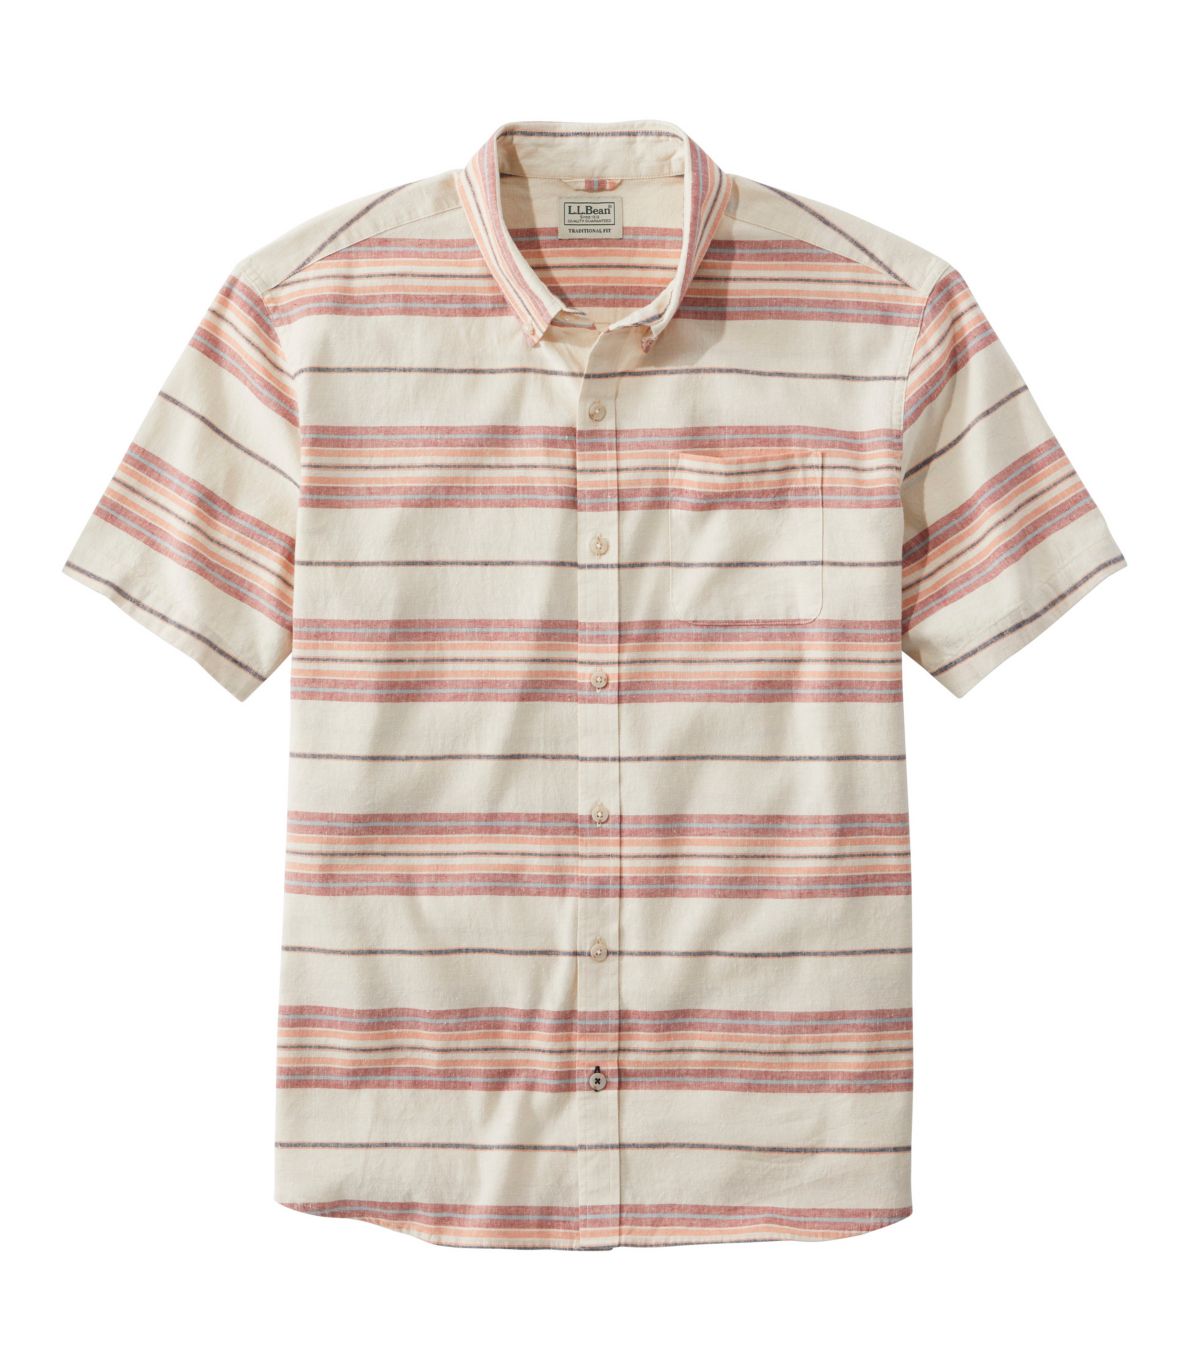 Men's Backyard BBQ Shirt, Short-Sleeve, Traditional Untucked Fit, Stripe